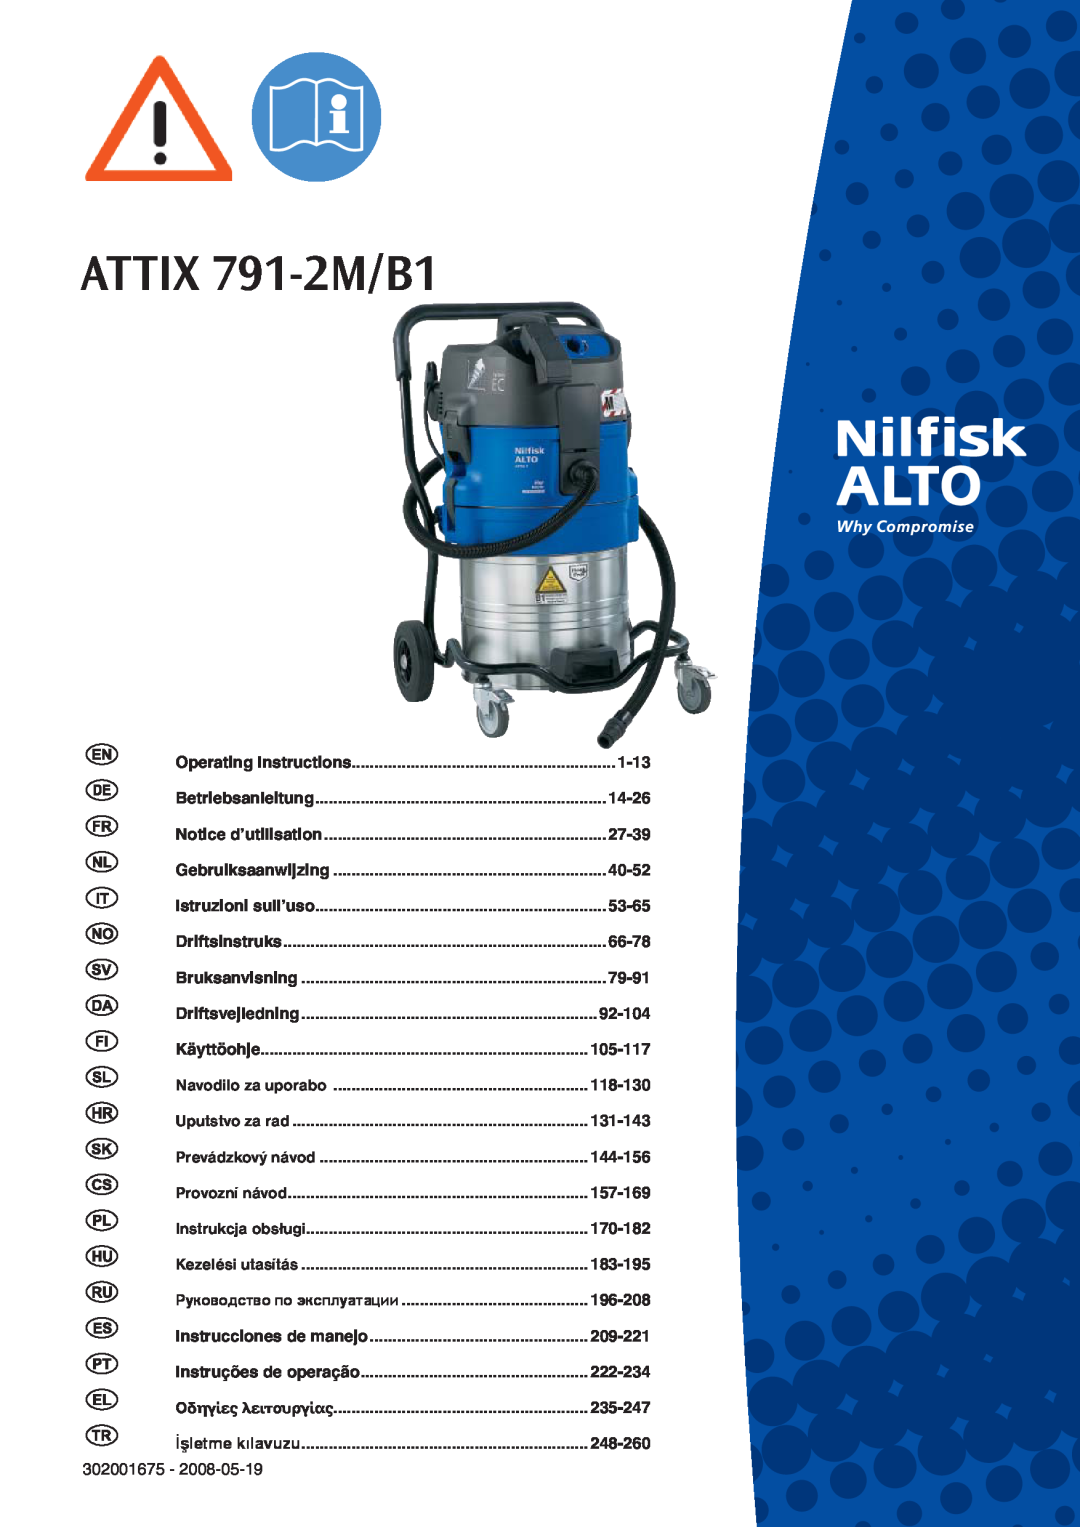 Nilfisk-ALTO ATTIX 791-2M/B1 operating instructions 1-13, 14-26, 27-39, 40-52, 53-65, 66-78, 79-91, 92-104 